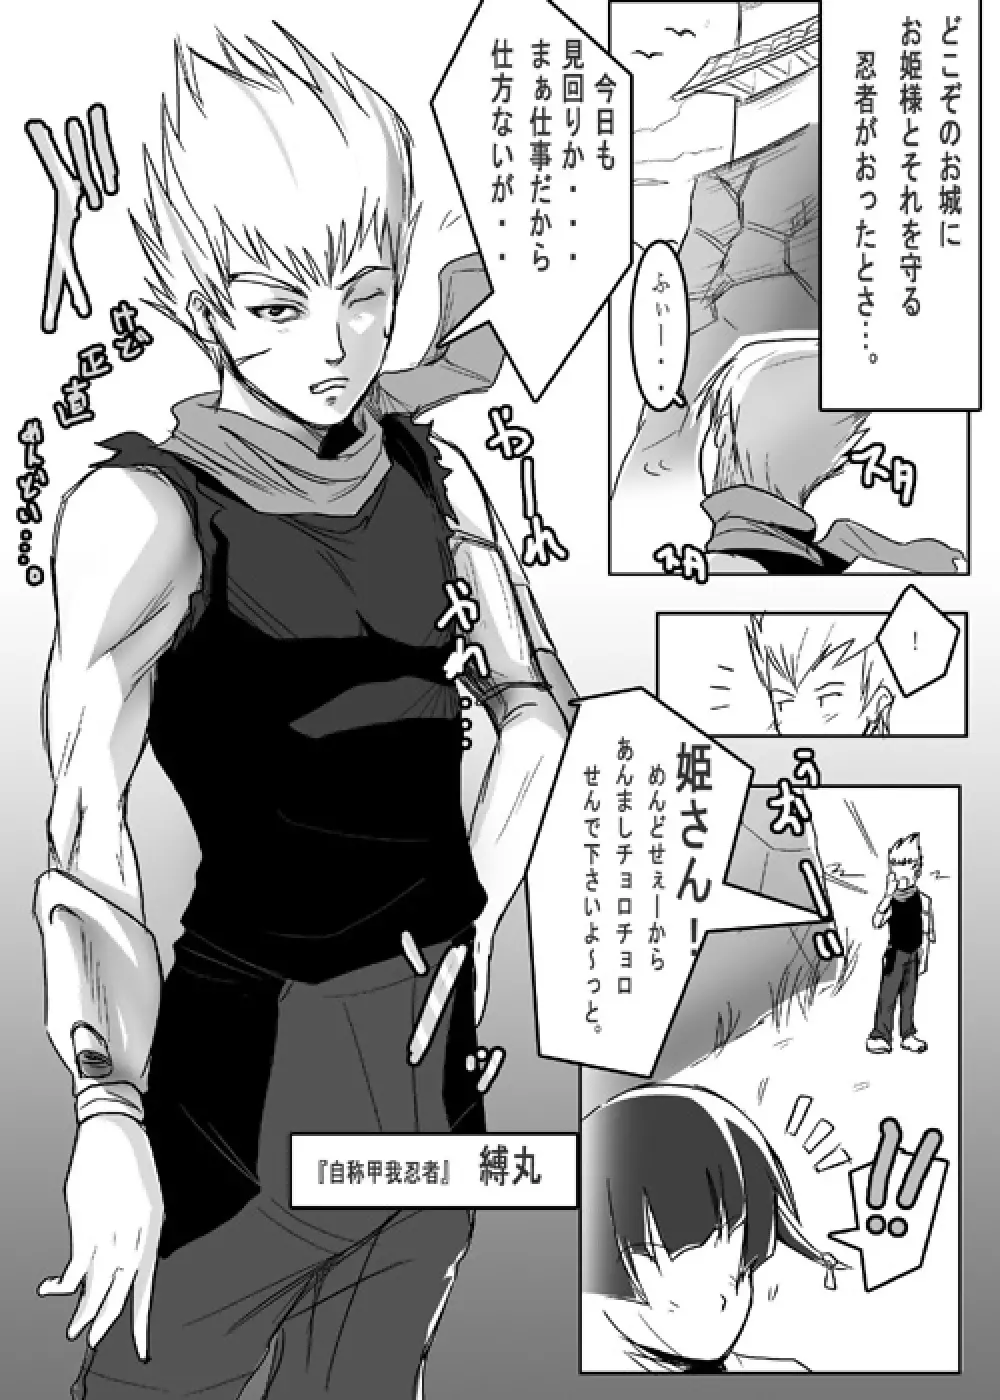 Same-themed manga about kid fighting female ninjas from japanese imageboard. 49ページ